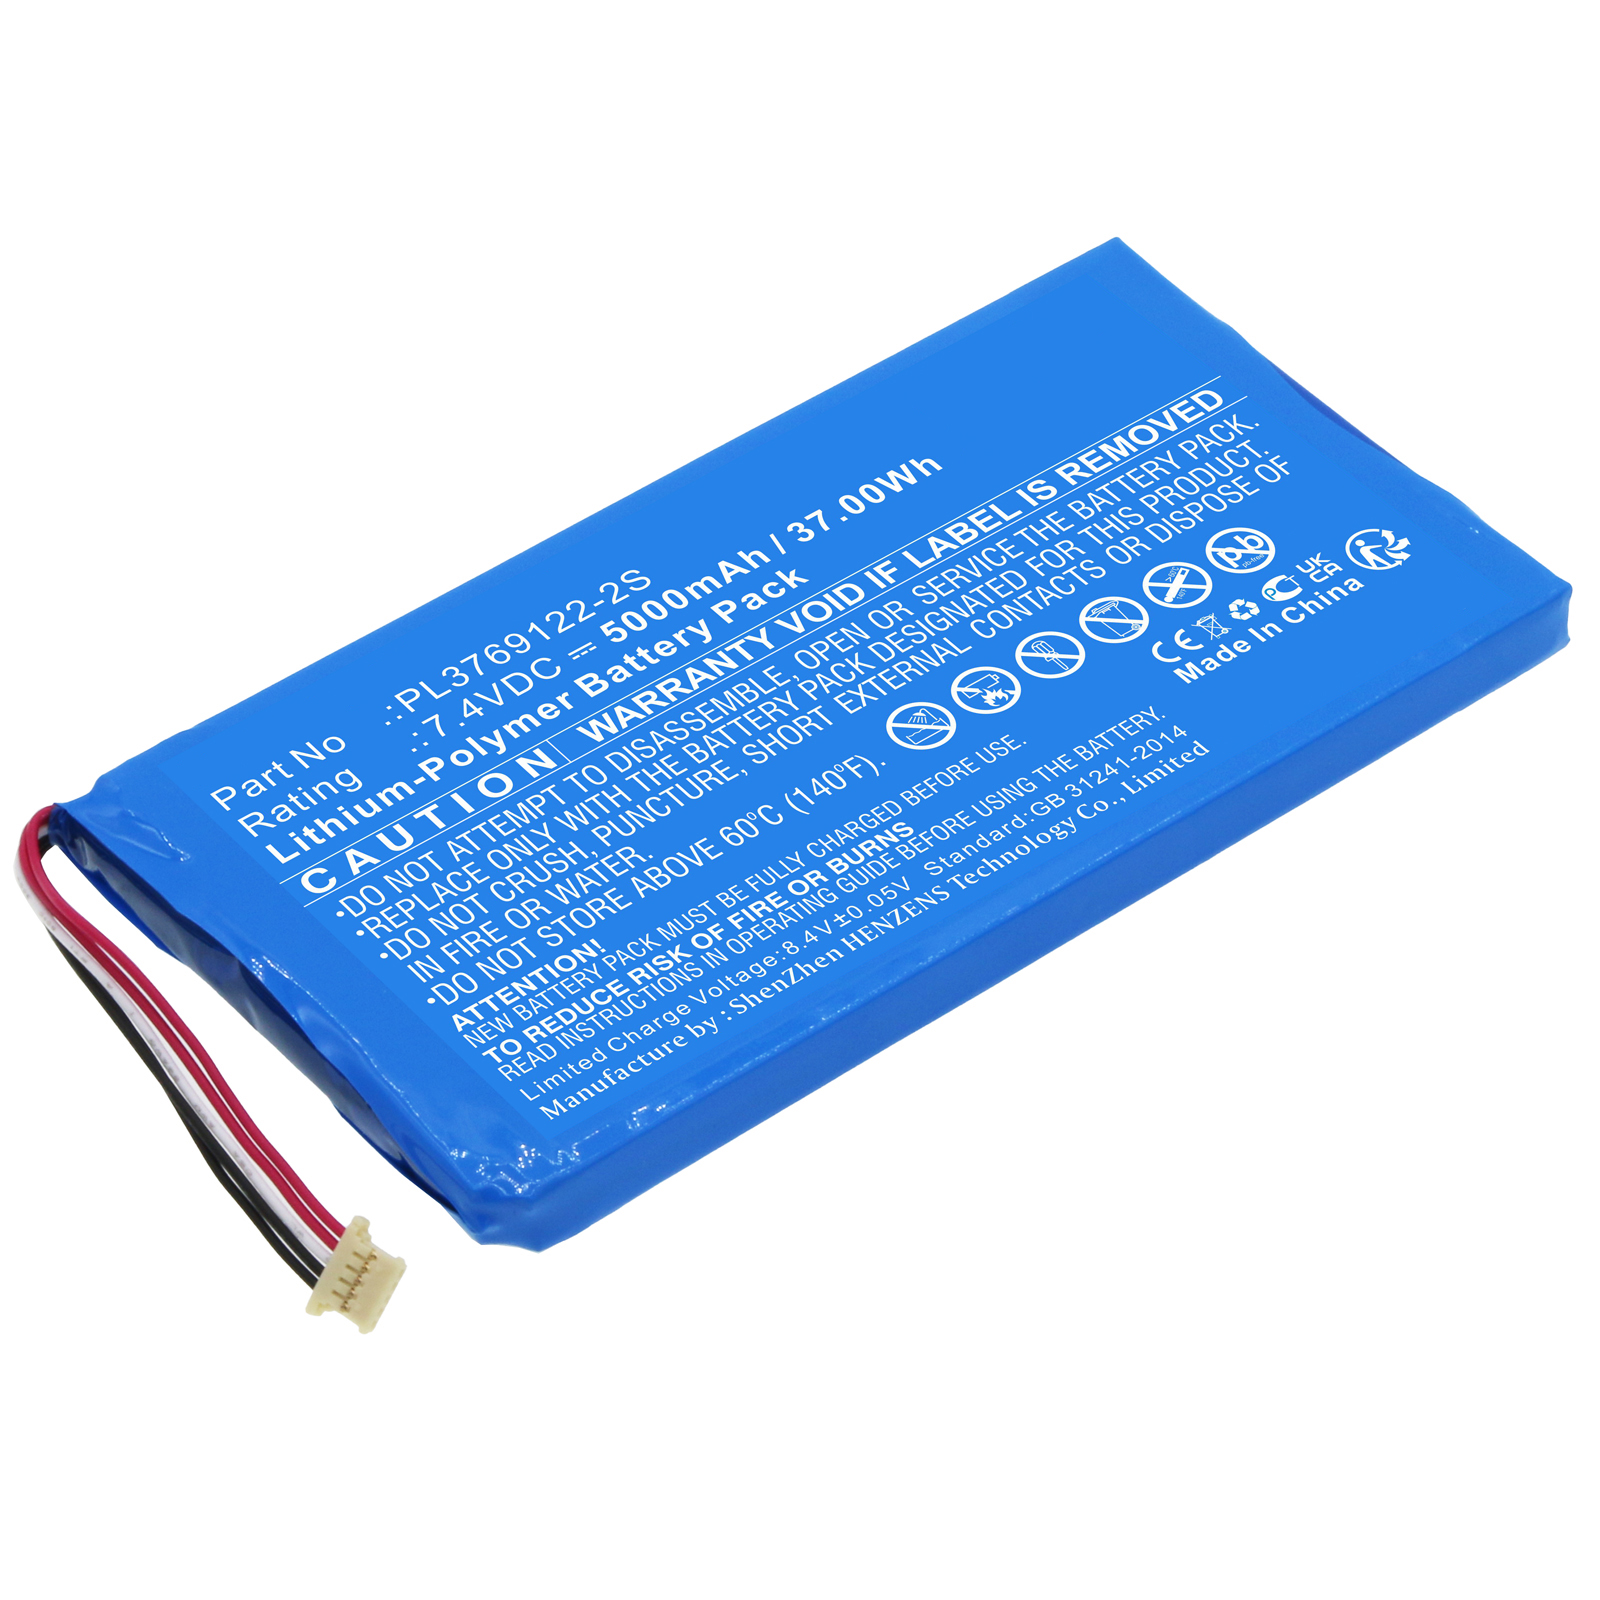 Synergy Digital Diagnostic Scanner Battery, Compatible with XTOOL PL3769122-2S Diagnostic Scanner Battery (Li-Pol, 7.4V, 5000mAh)